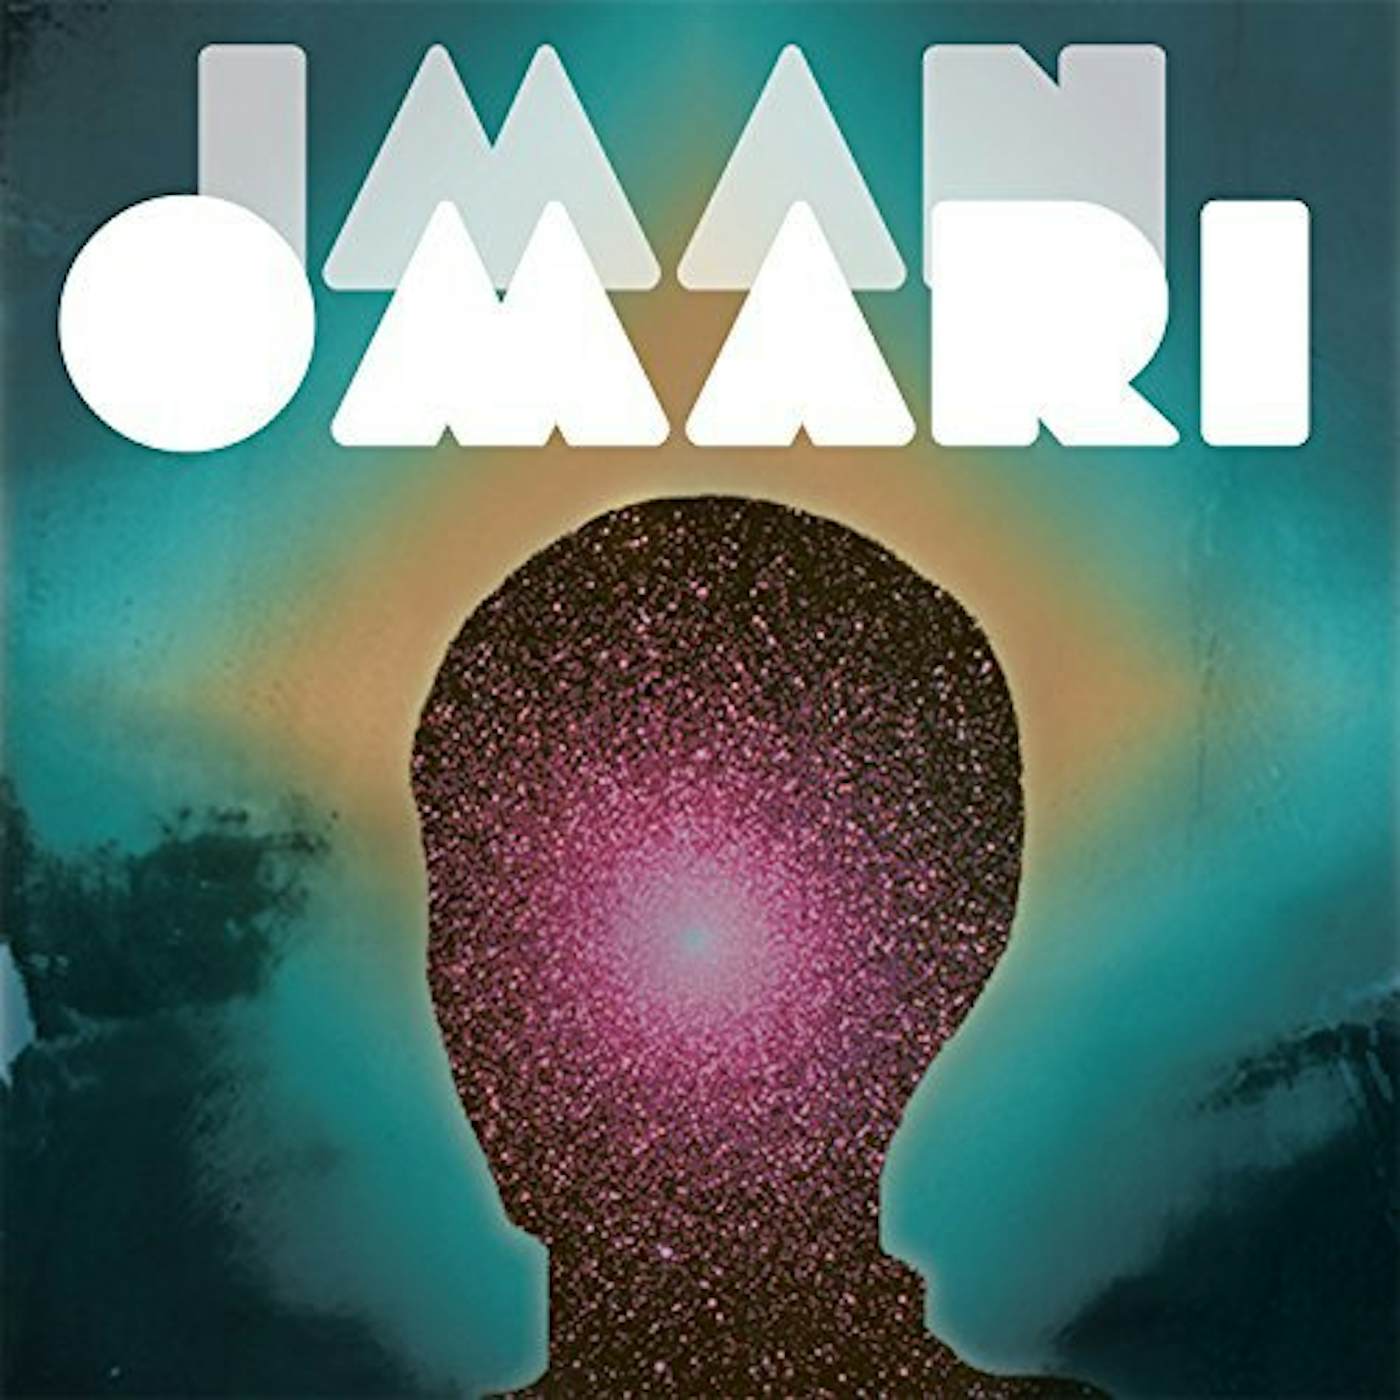 Iman Omari ENERGY Vinyl Record